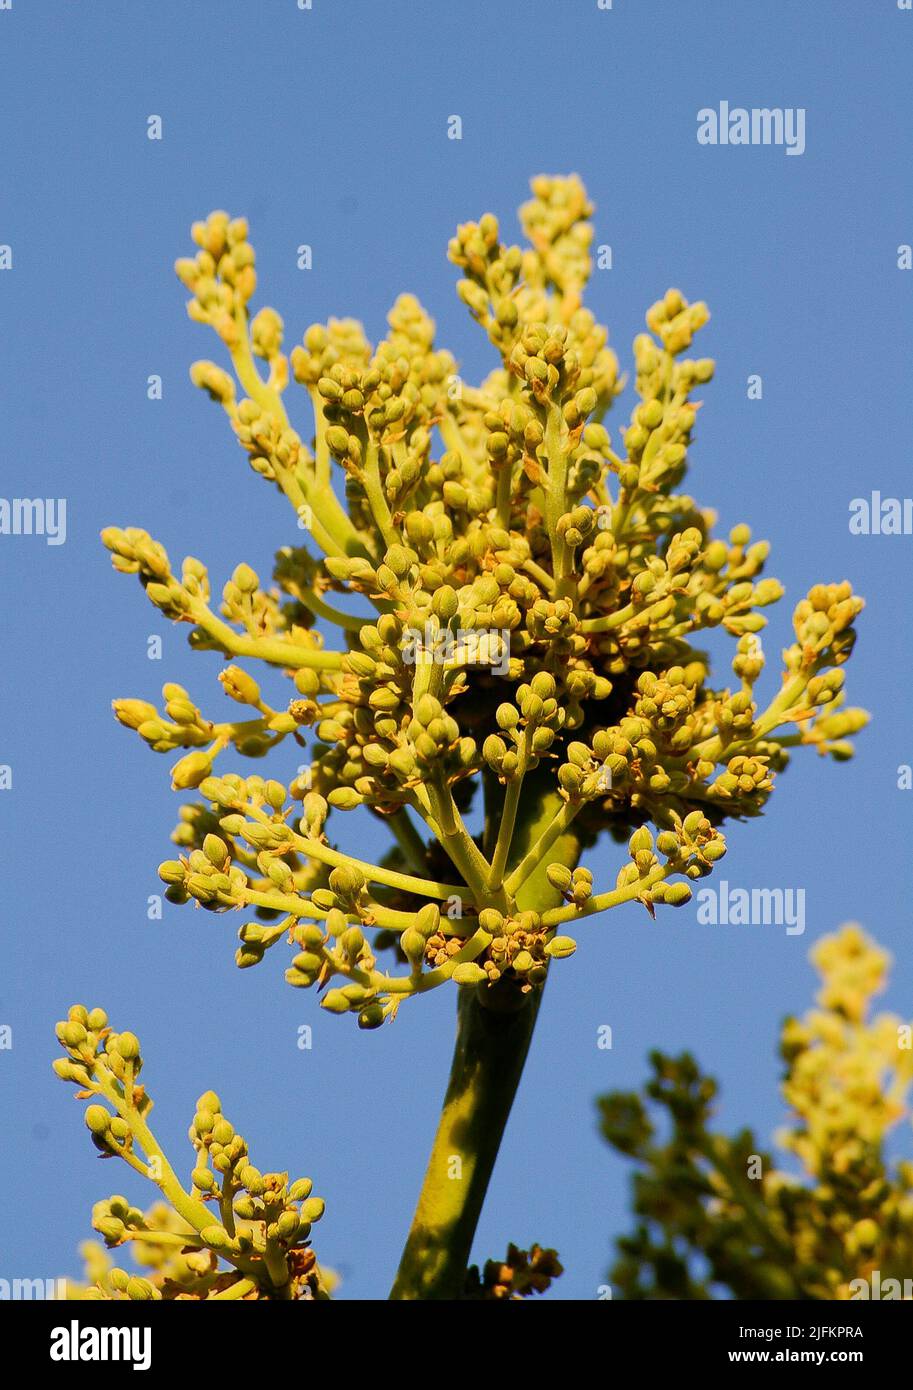 Sprig of yellow avocado (persea americana) blossom. Many flowers on single stem of Hass avocado tree. Spring, Tamborine Mountain, Australia. Blue sky. Stock Photo